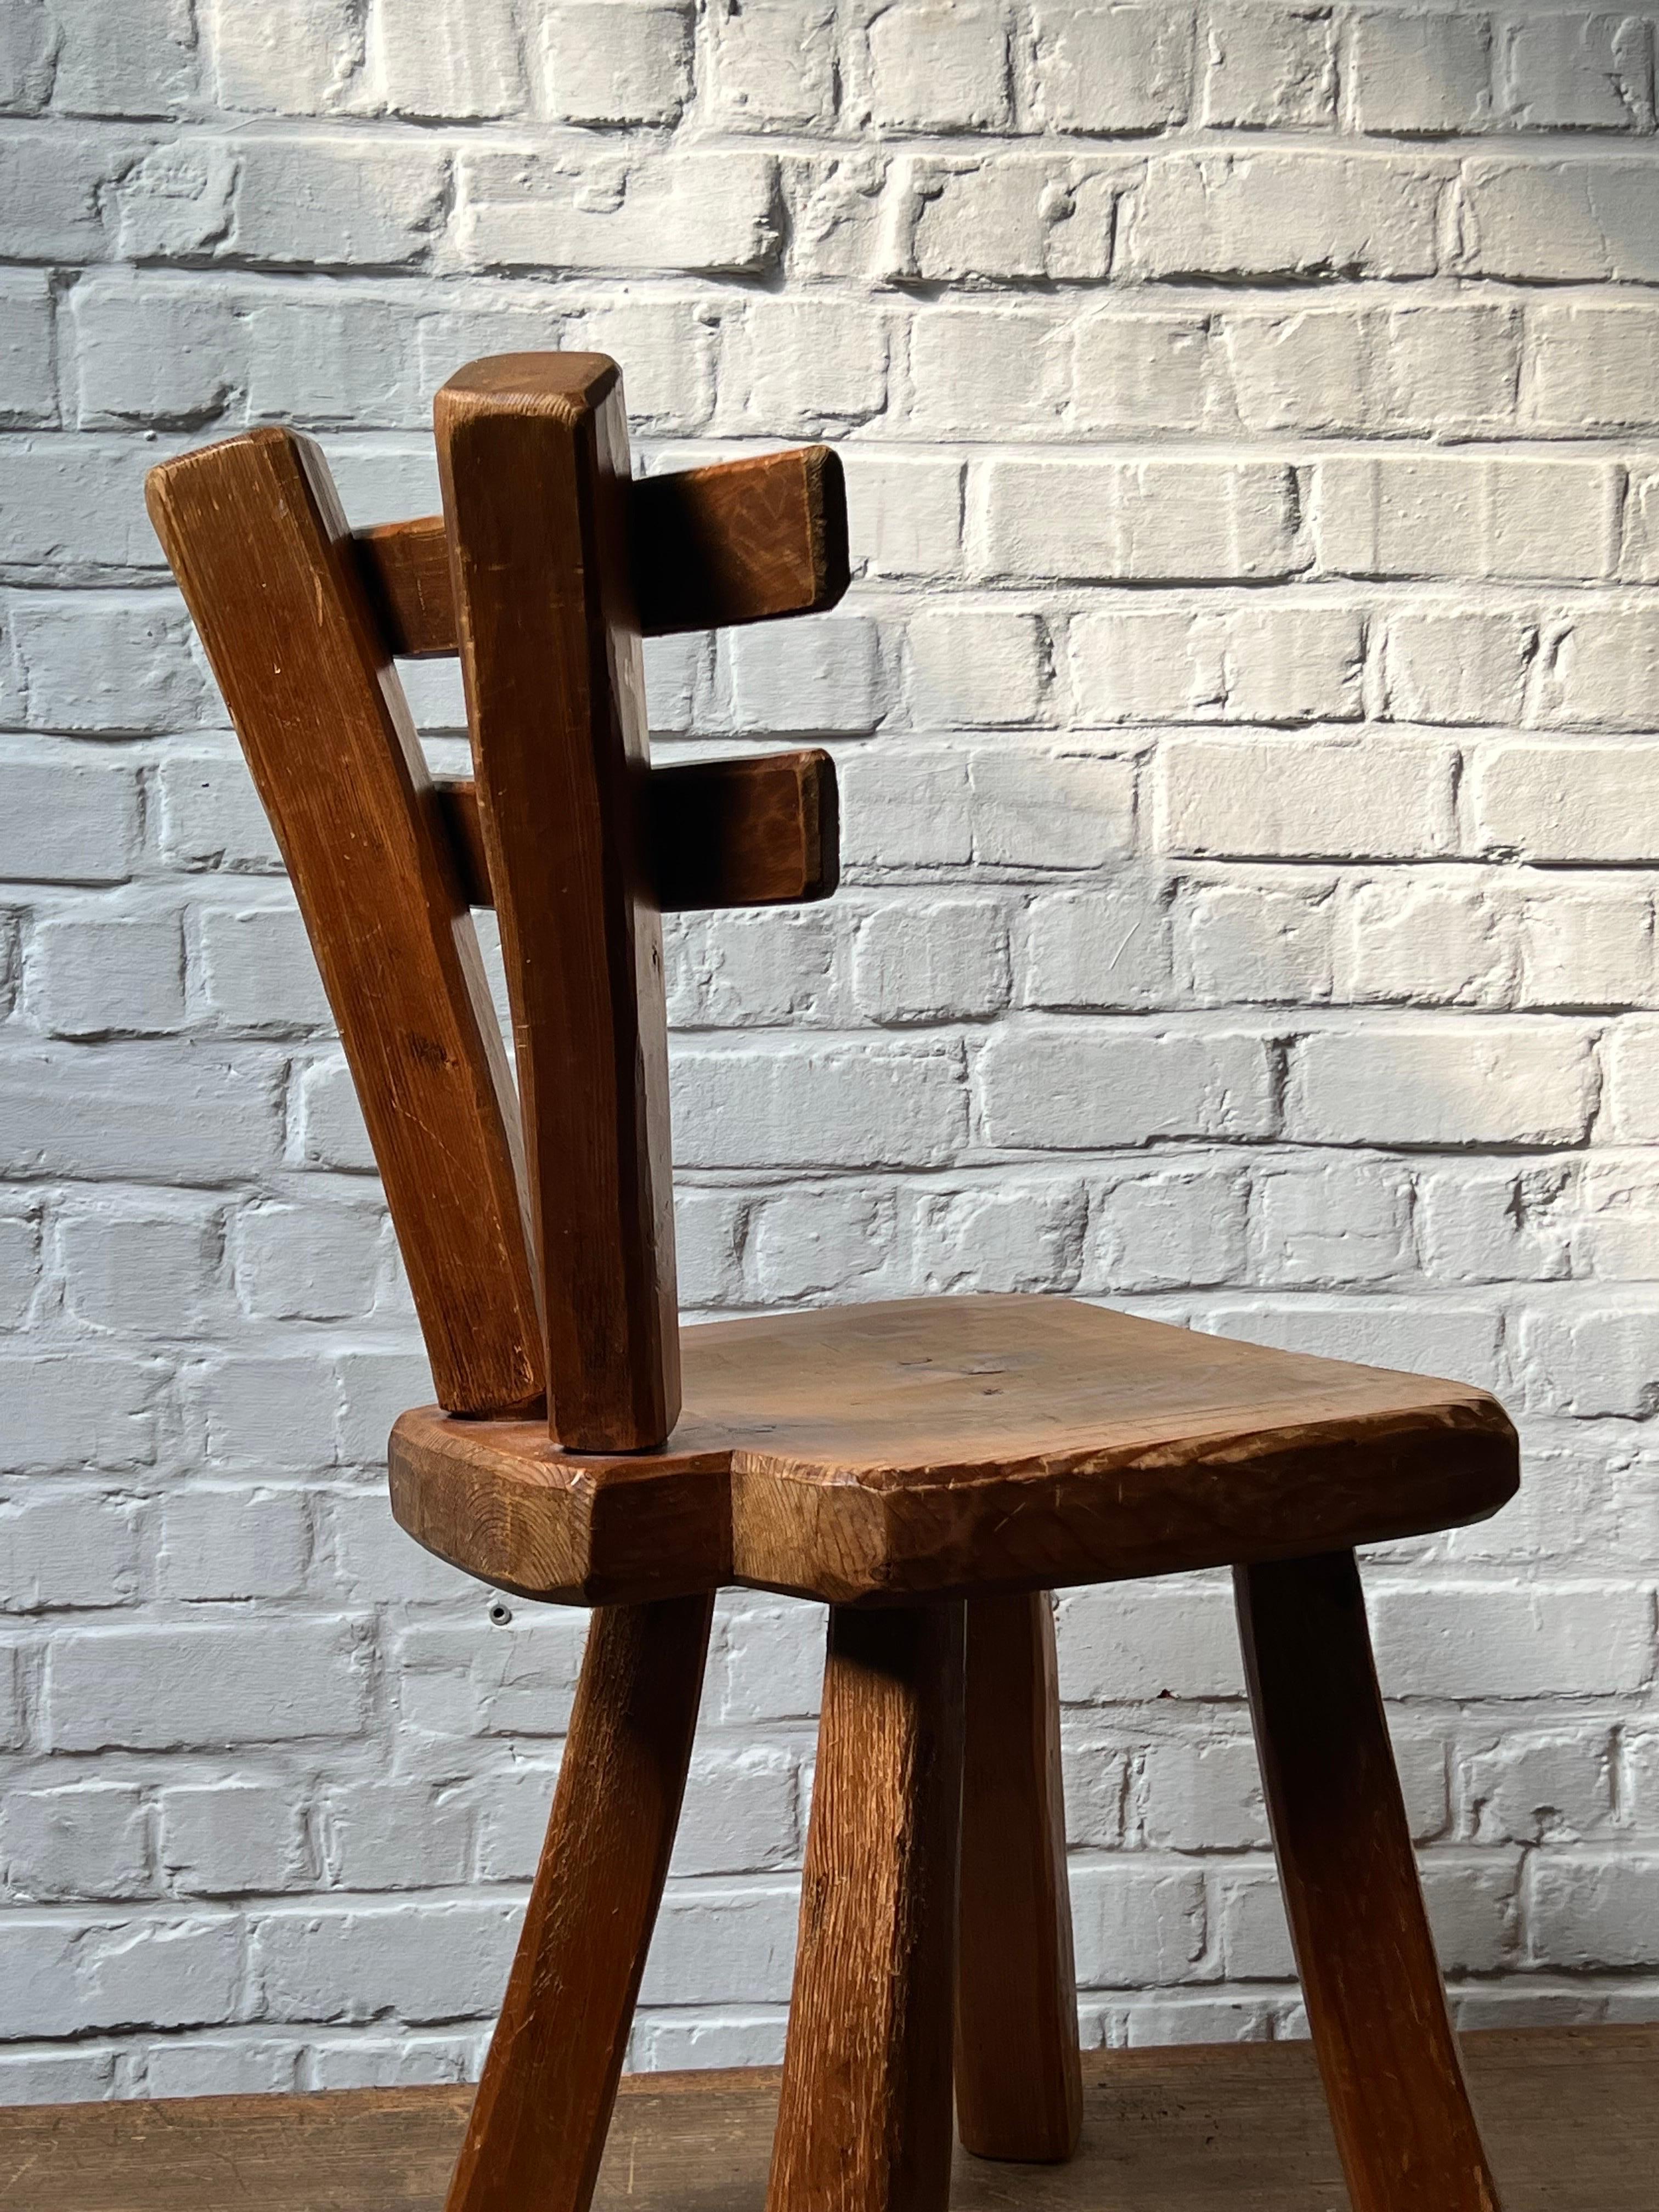 20th Century French Brutalist pine Tree chair, Nice Joinery, 1950s Handmade, folk art